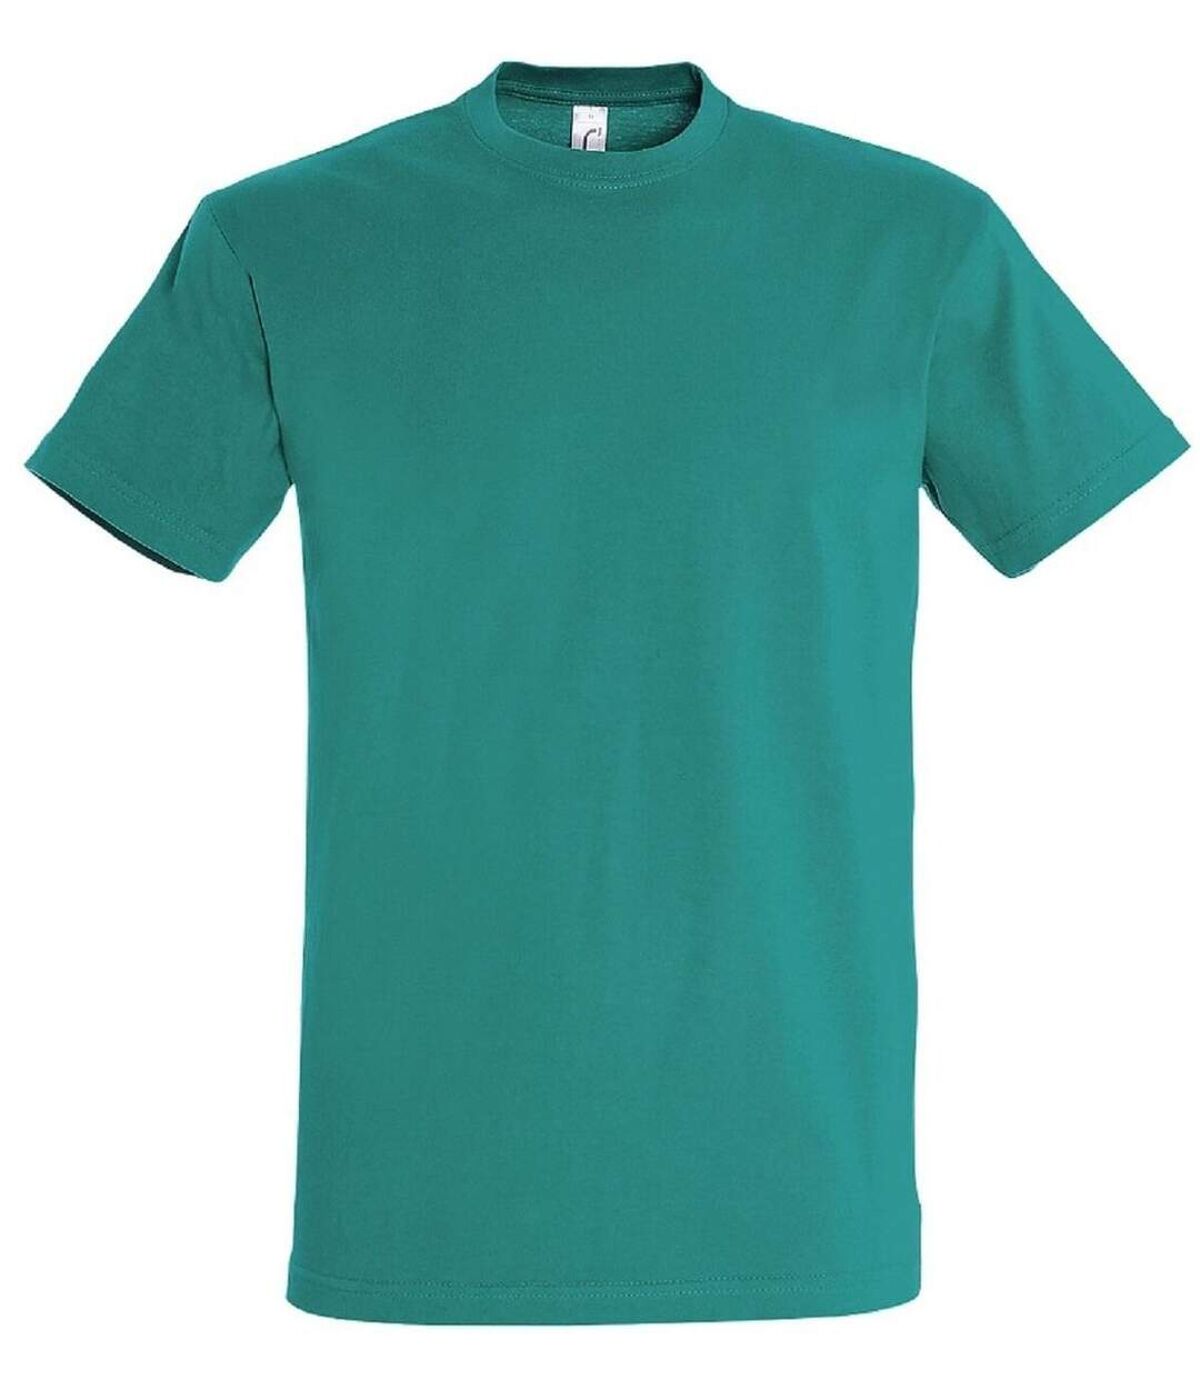 T-shirt manches courtes - Mixte - 11500 - vert emeraude